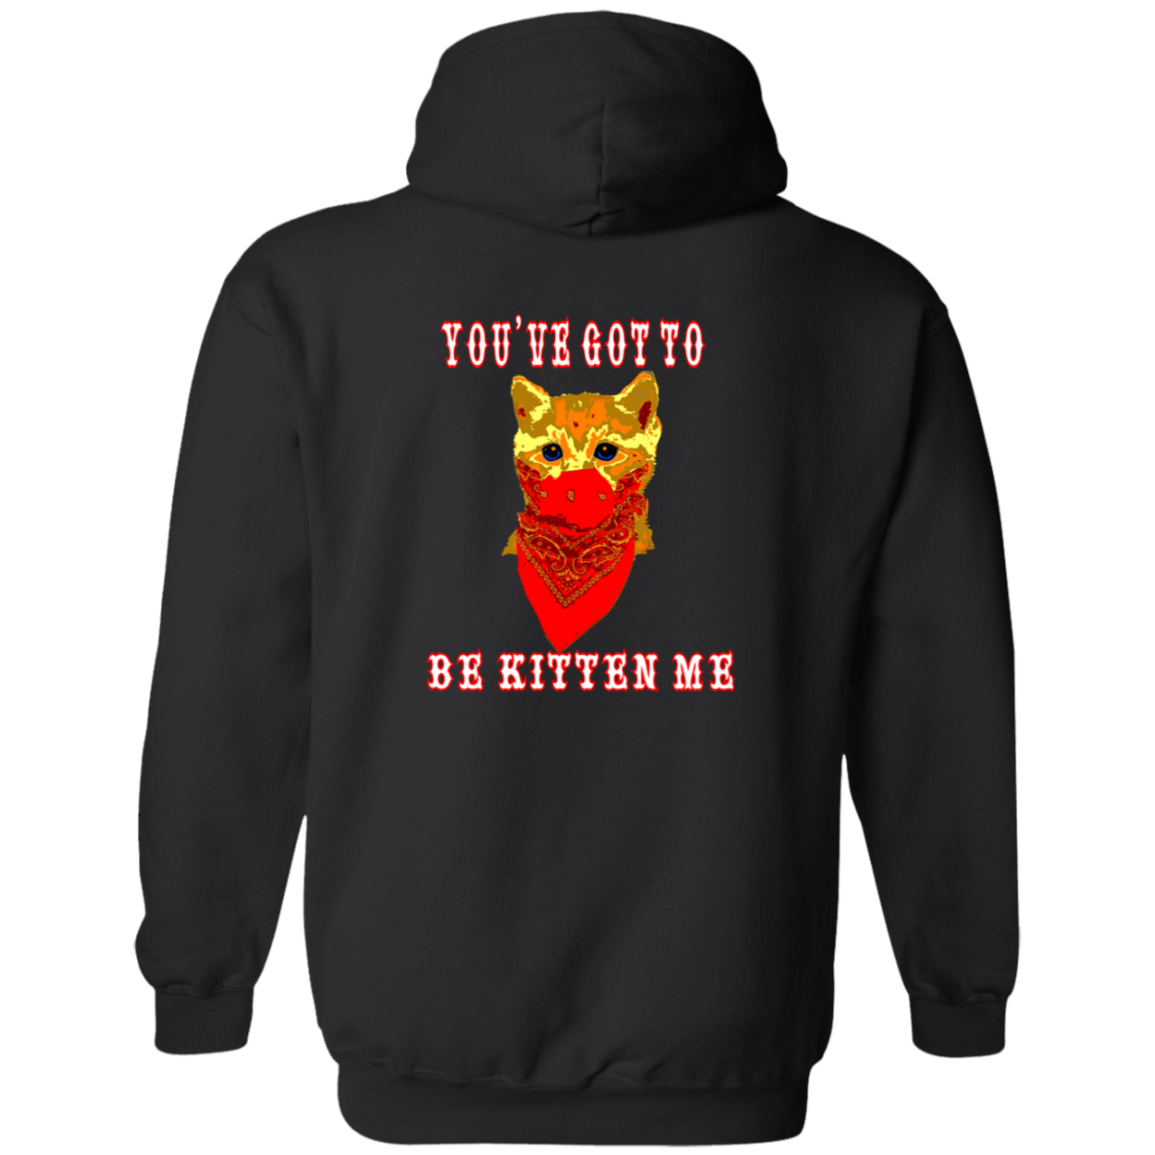 ArtichokeUSA Custom Design. You've Got To Be Kitten Me?! 2020, Not What We Expected. Zip Up Hooded Sweatshirt